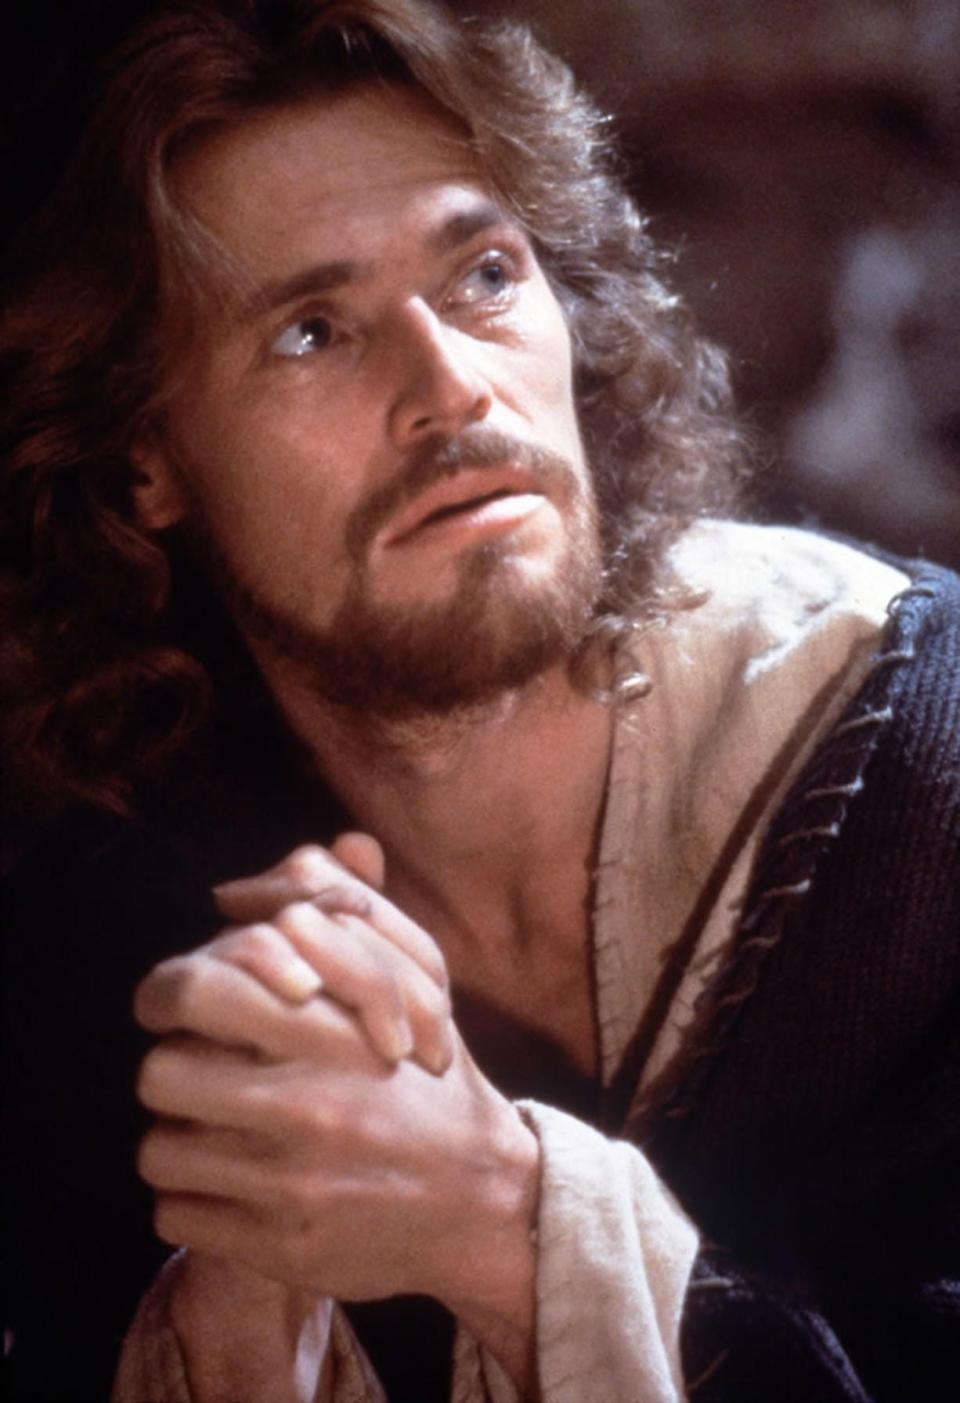 Willem Dafoe as Jesus in "The Last Temptation of Christ"